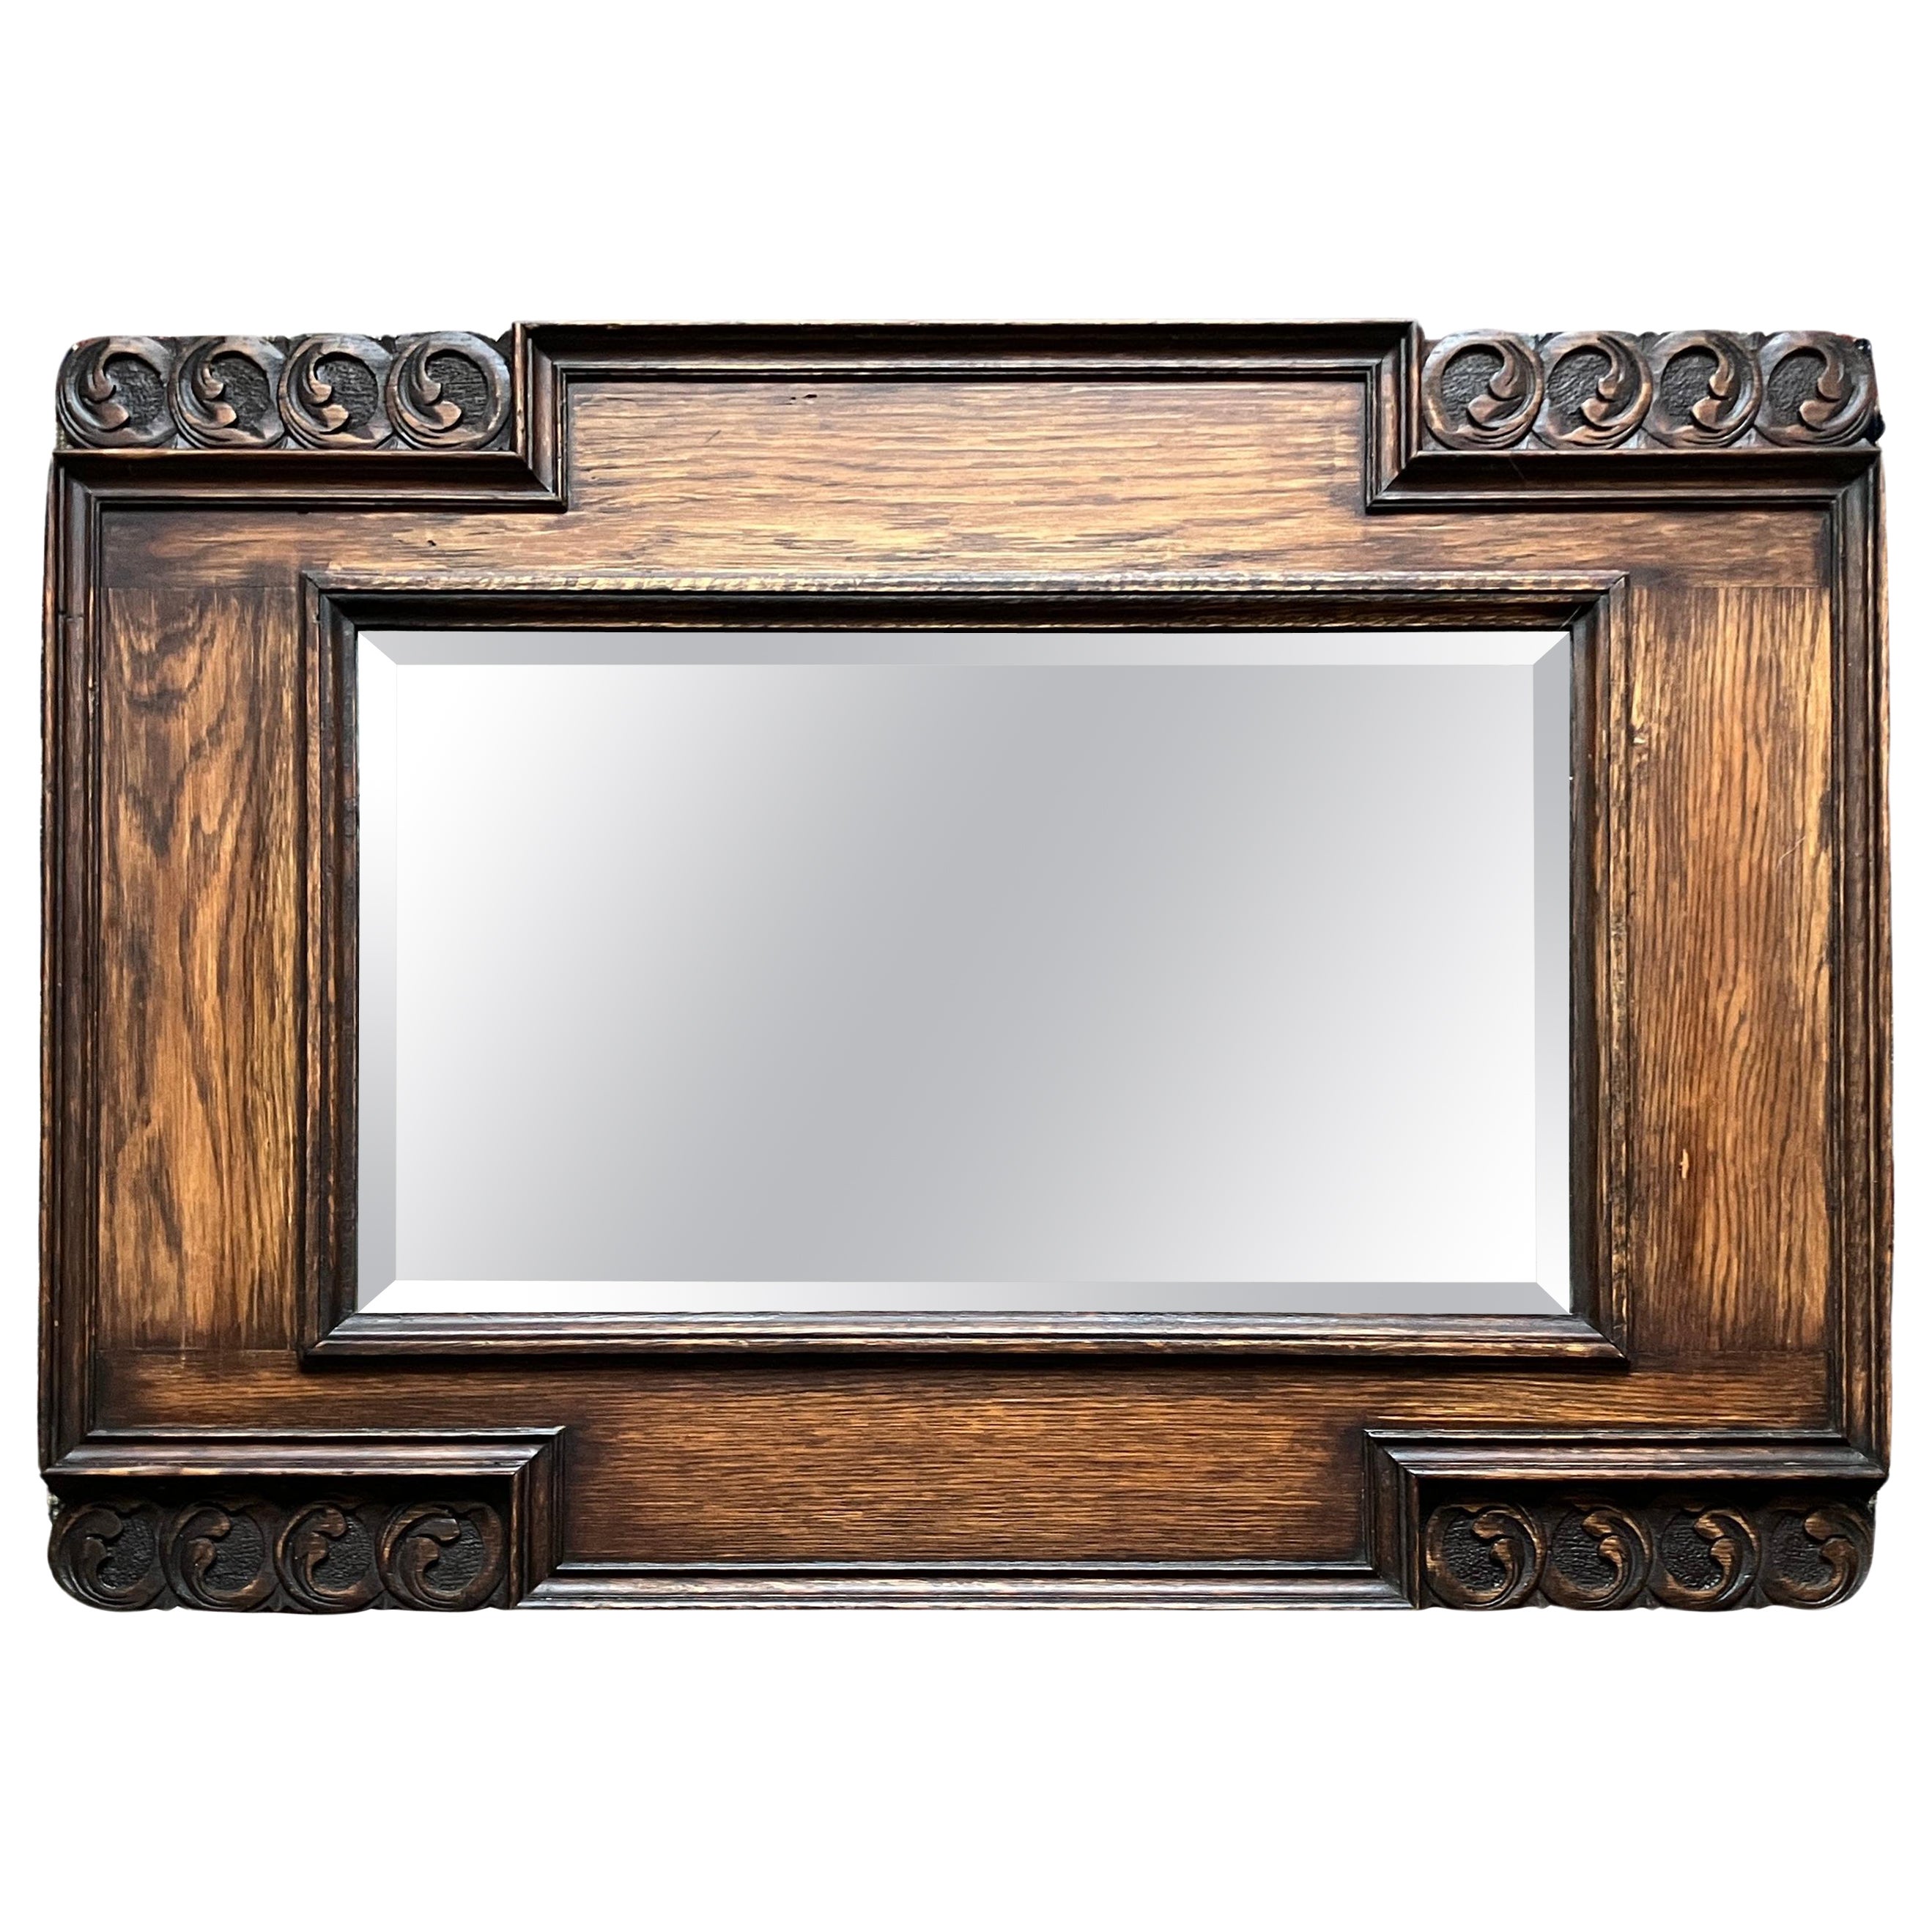 Large Decorative English Oak Framed Art & Crafts Mantel Mirror Late 19th Century